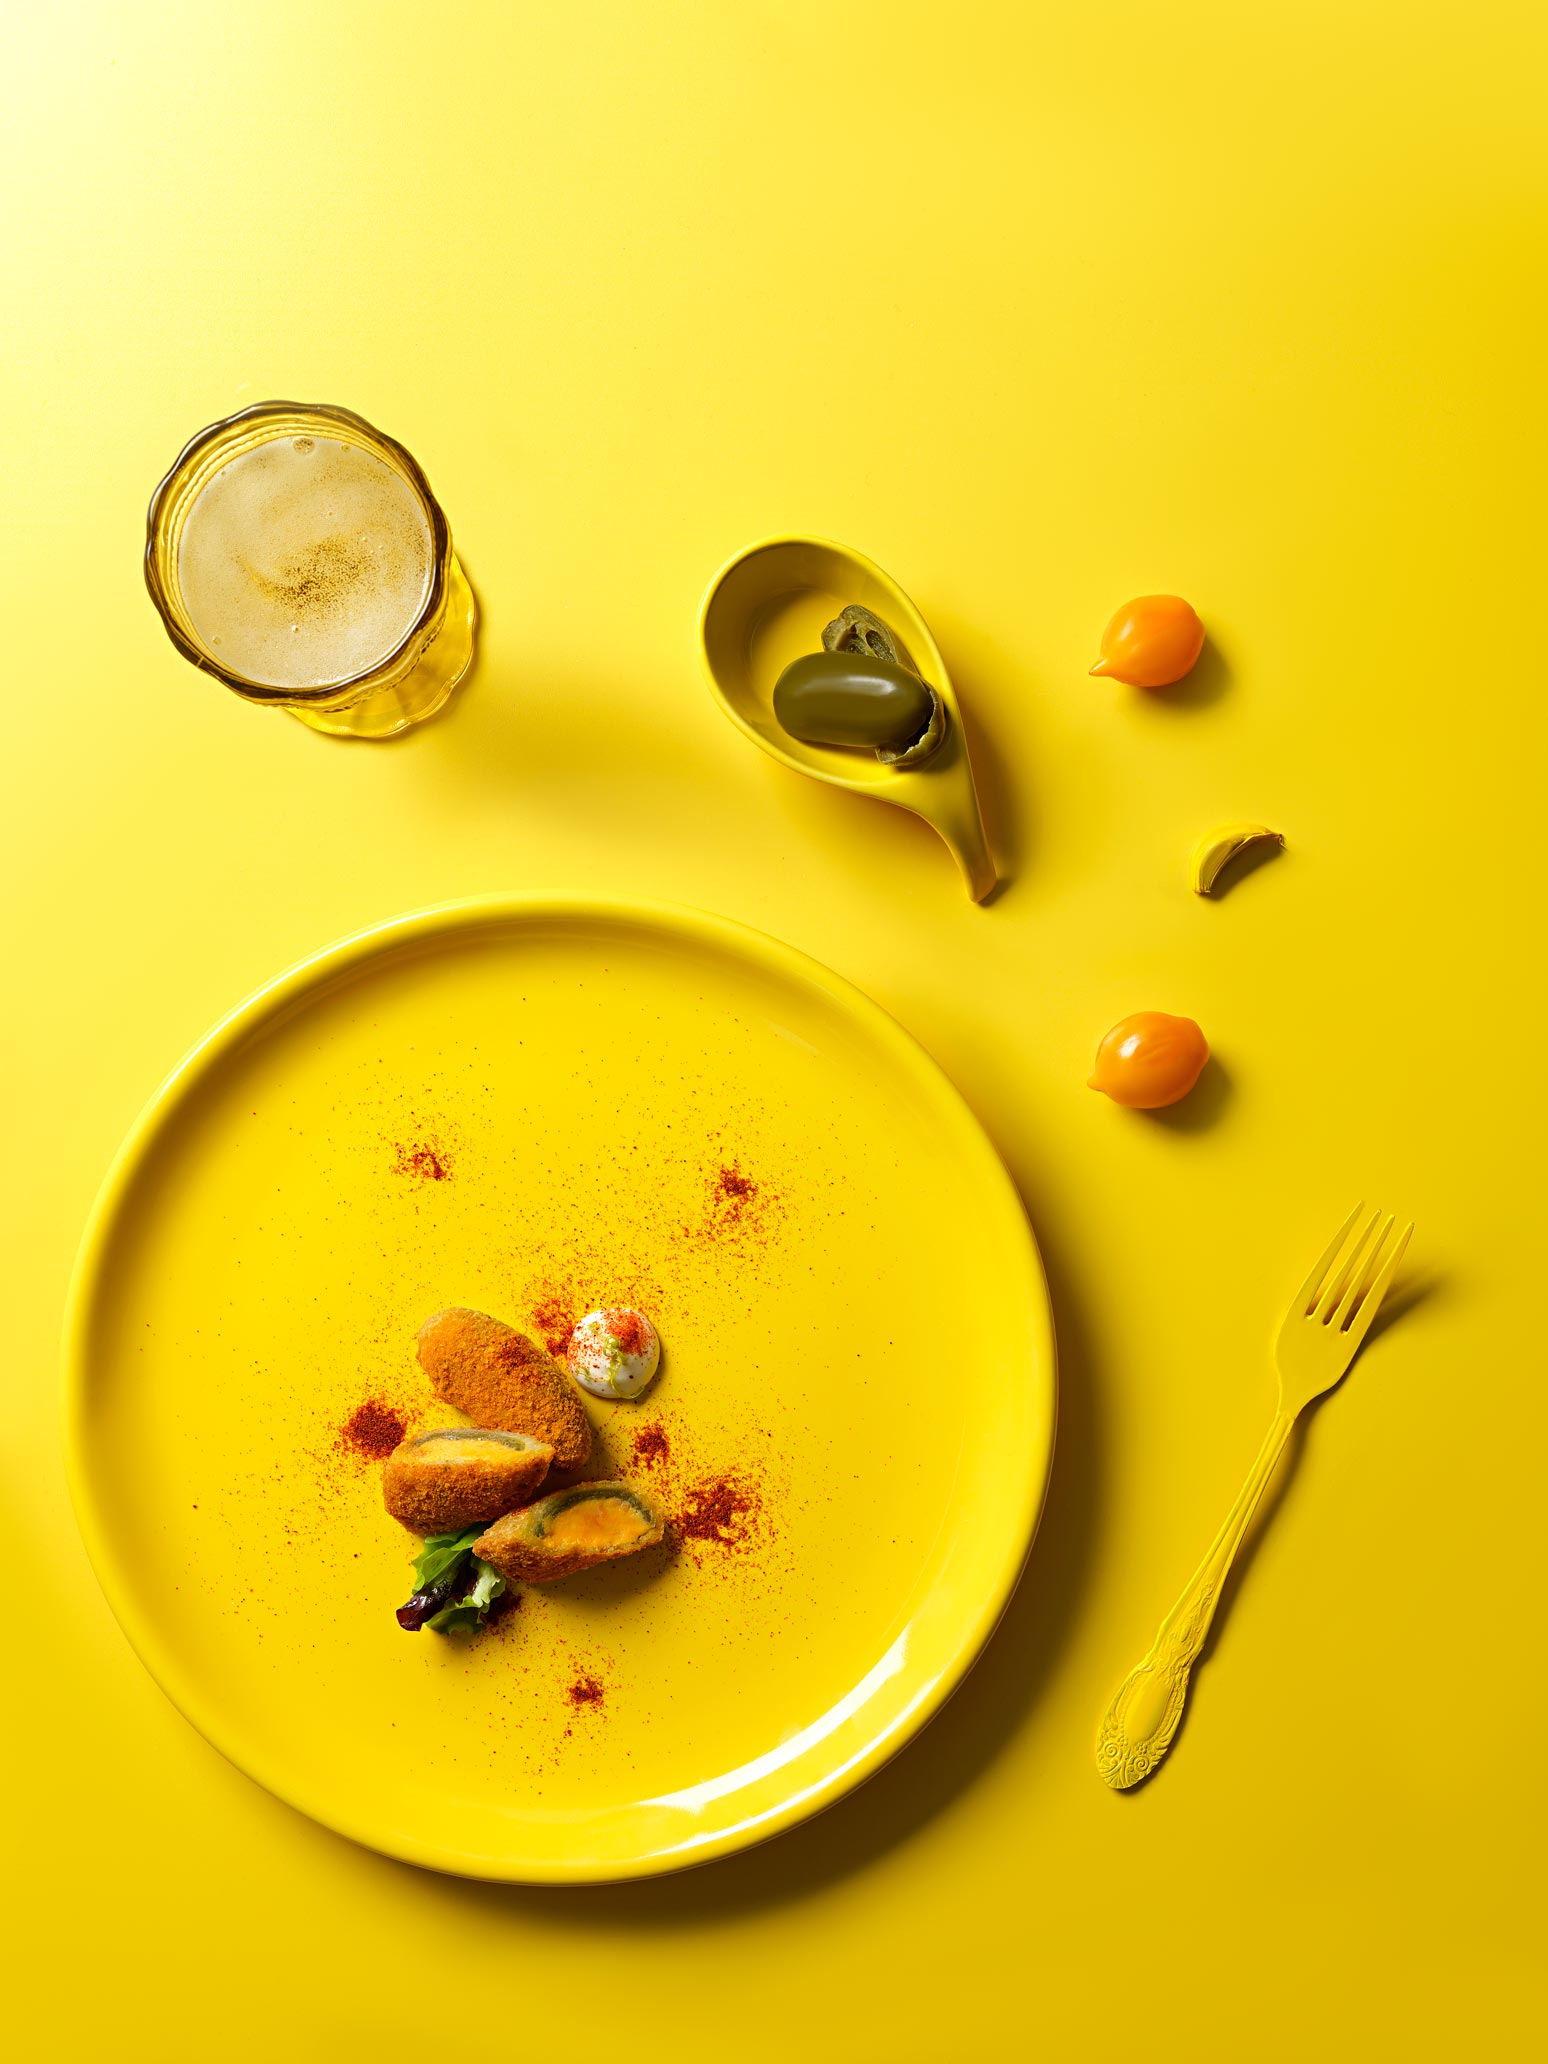 Food photography by Michele Collozino